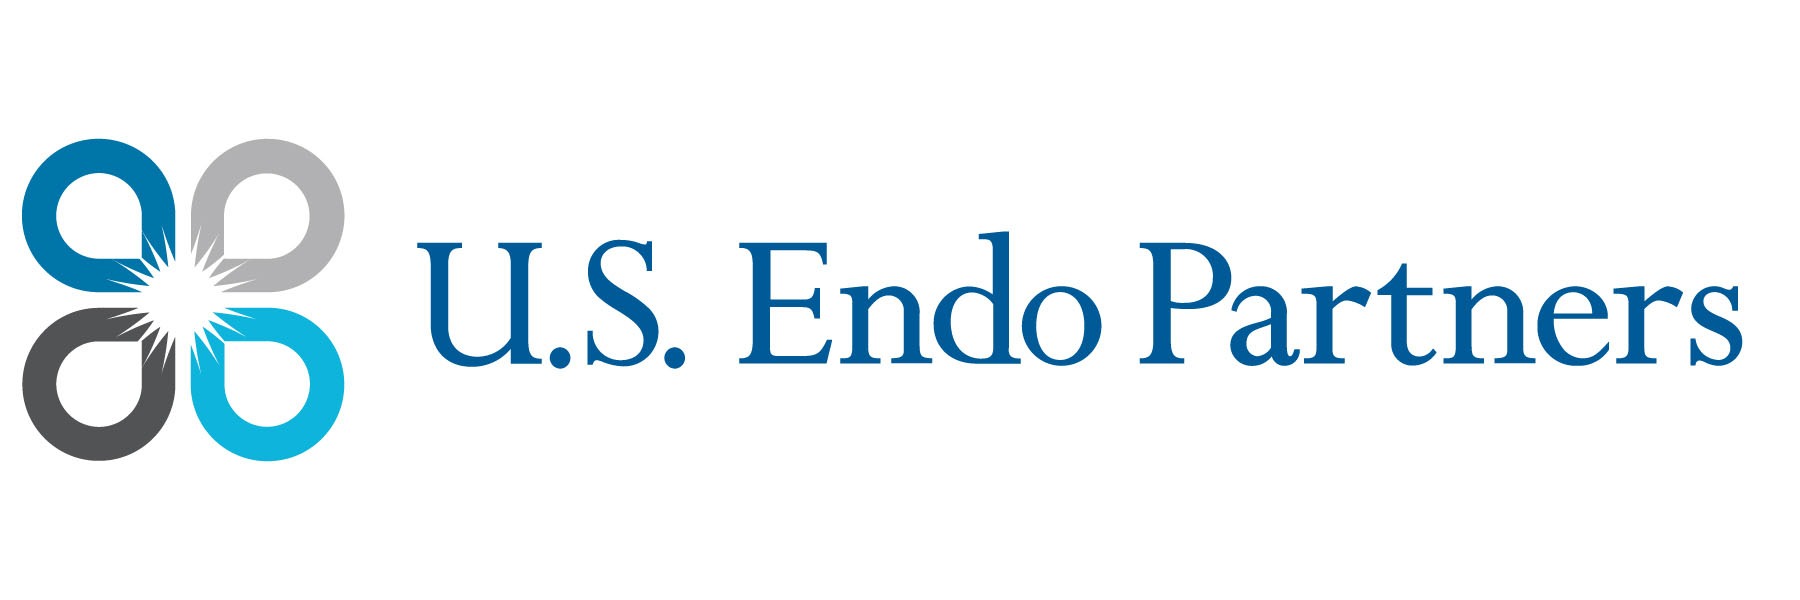 U.S. Endo Partners